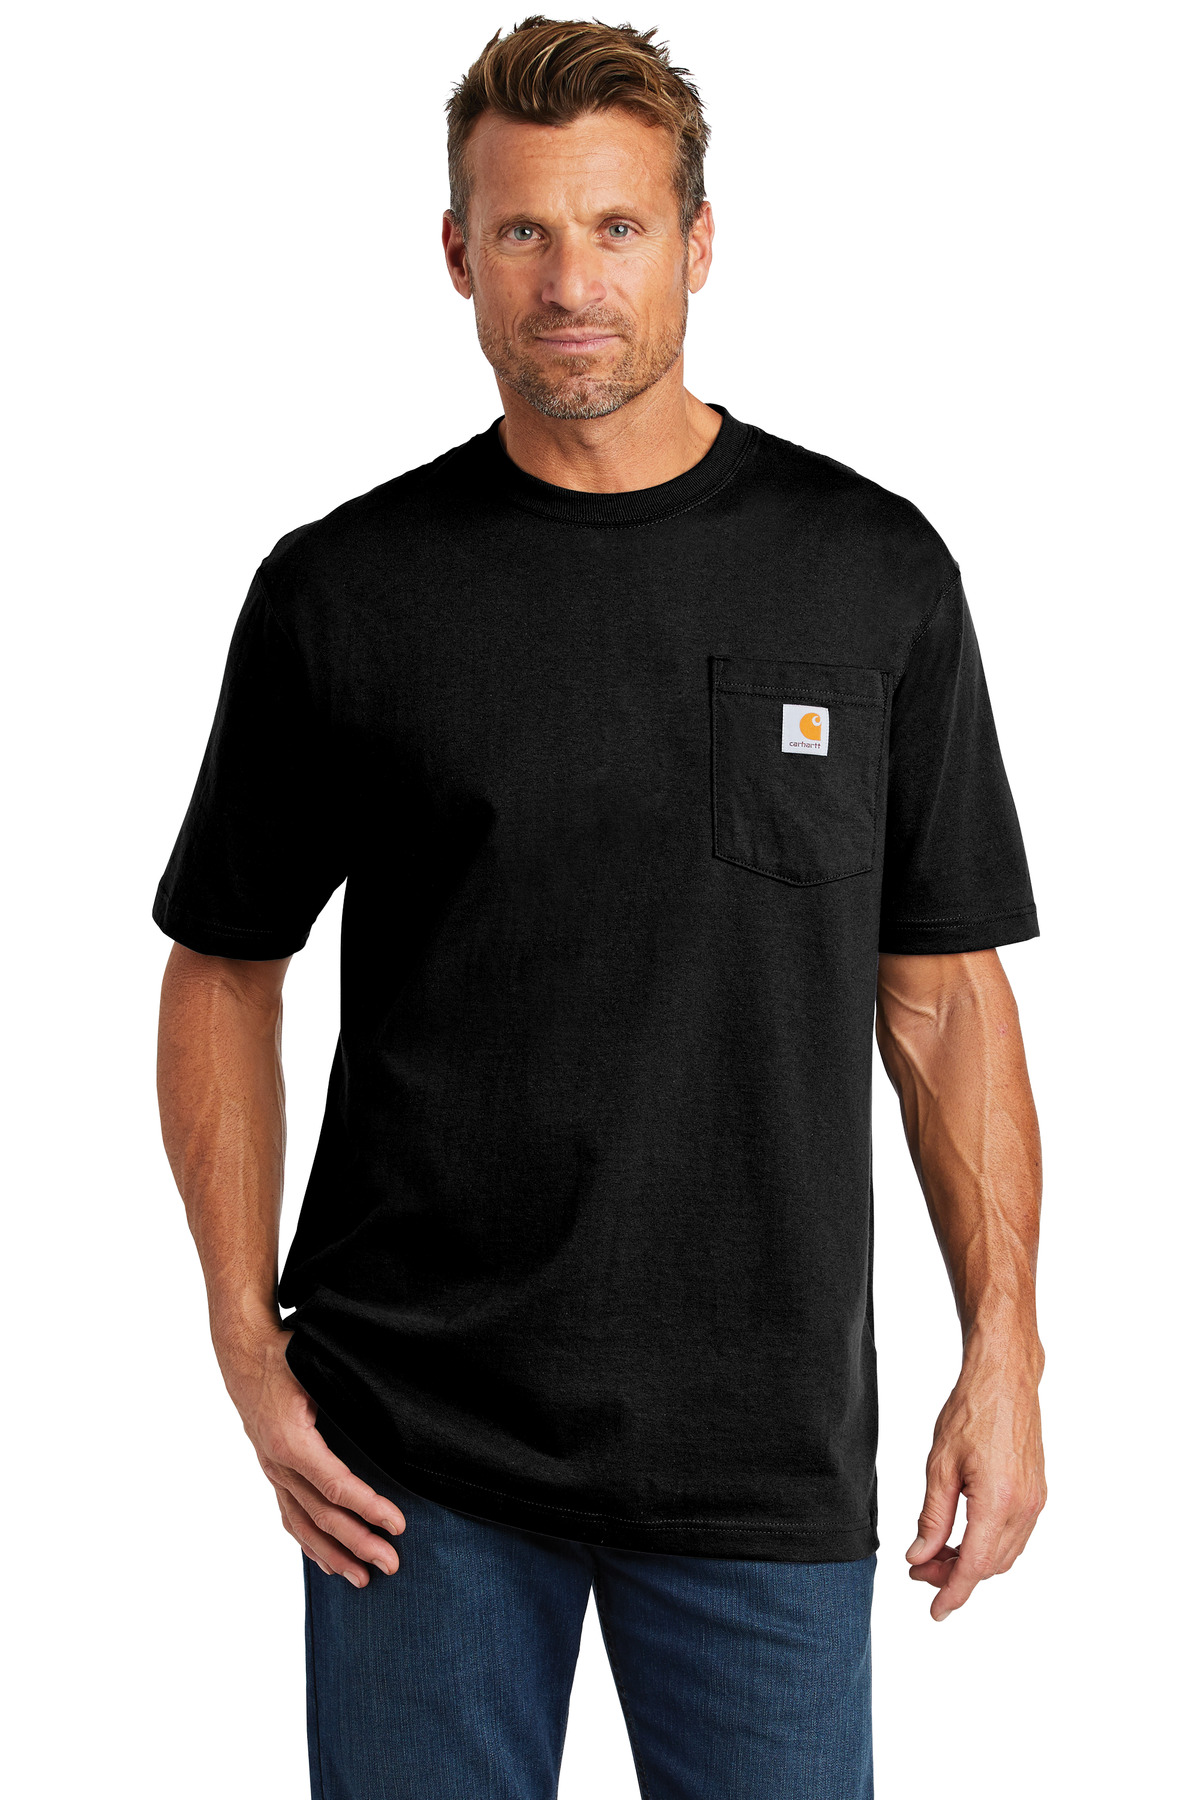 Carhartt Workwear Pocket Short Sleeve T-Shirt-Carhartt